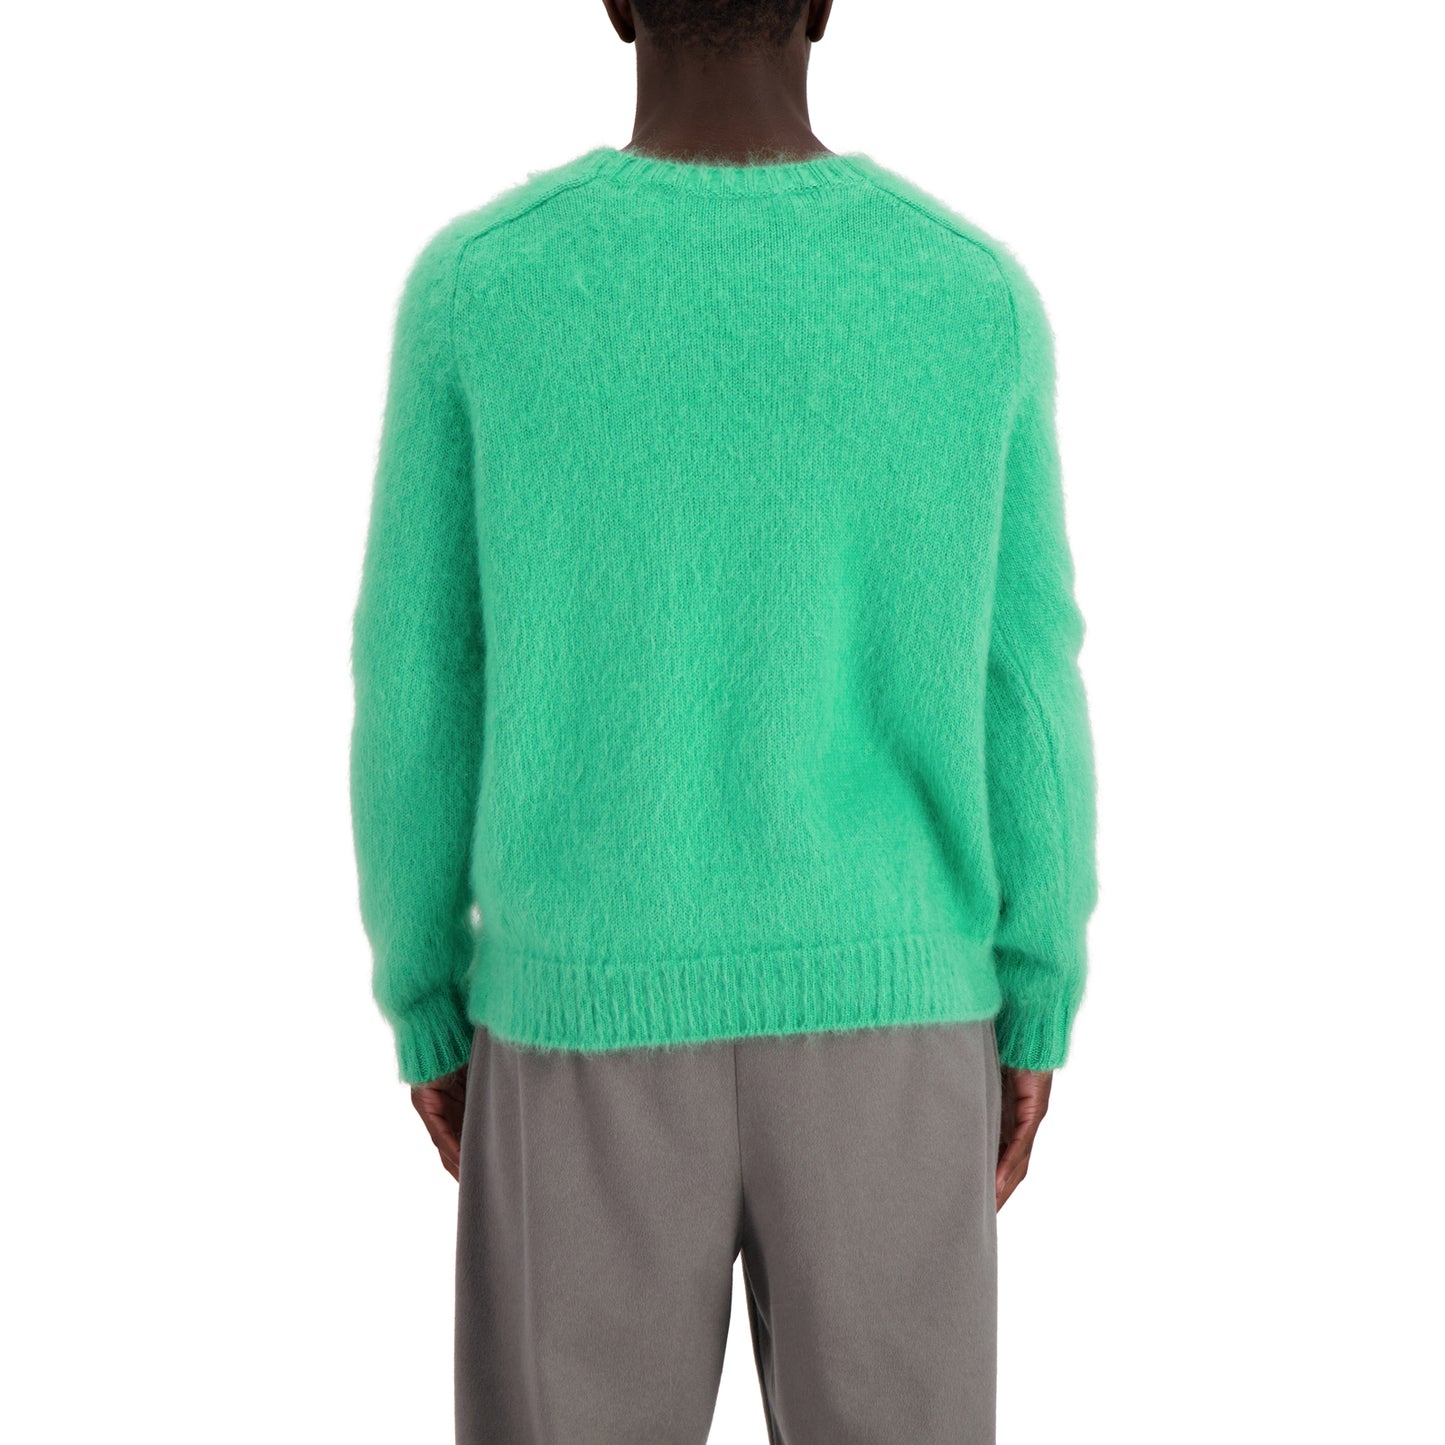 Jack Crew Neck Mohair Sweater Mint